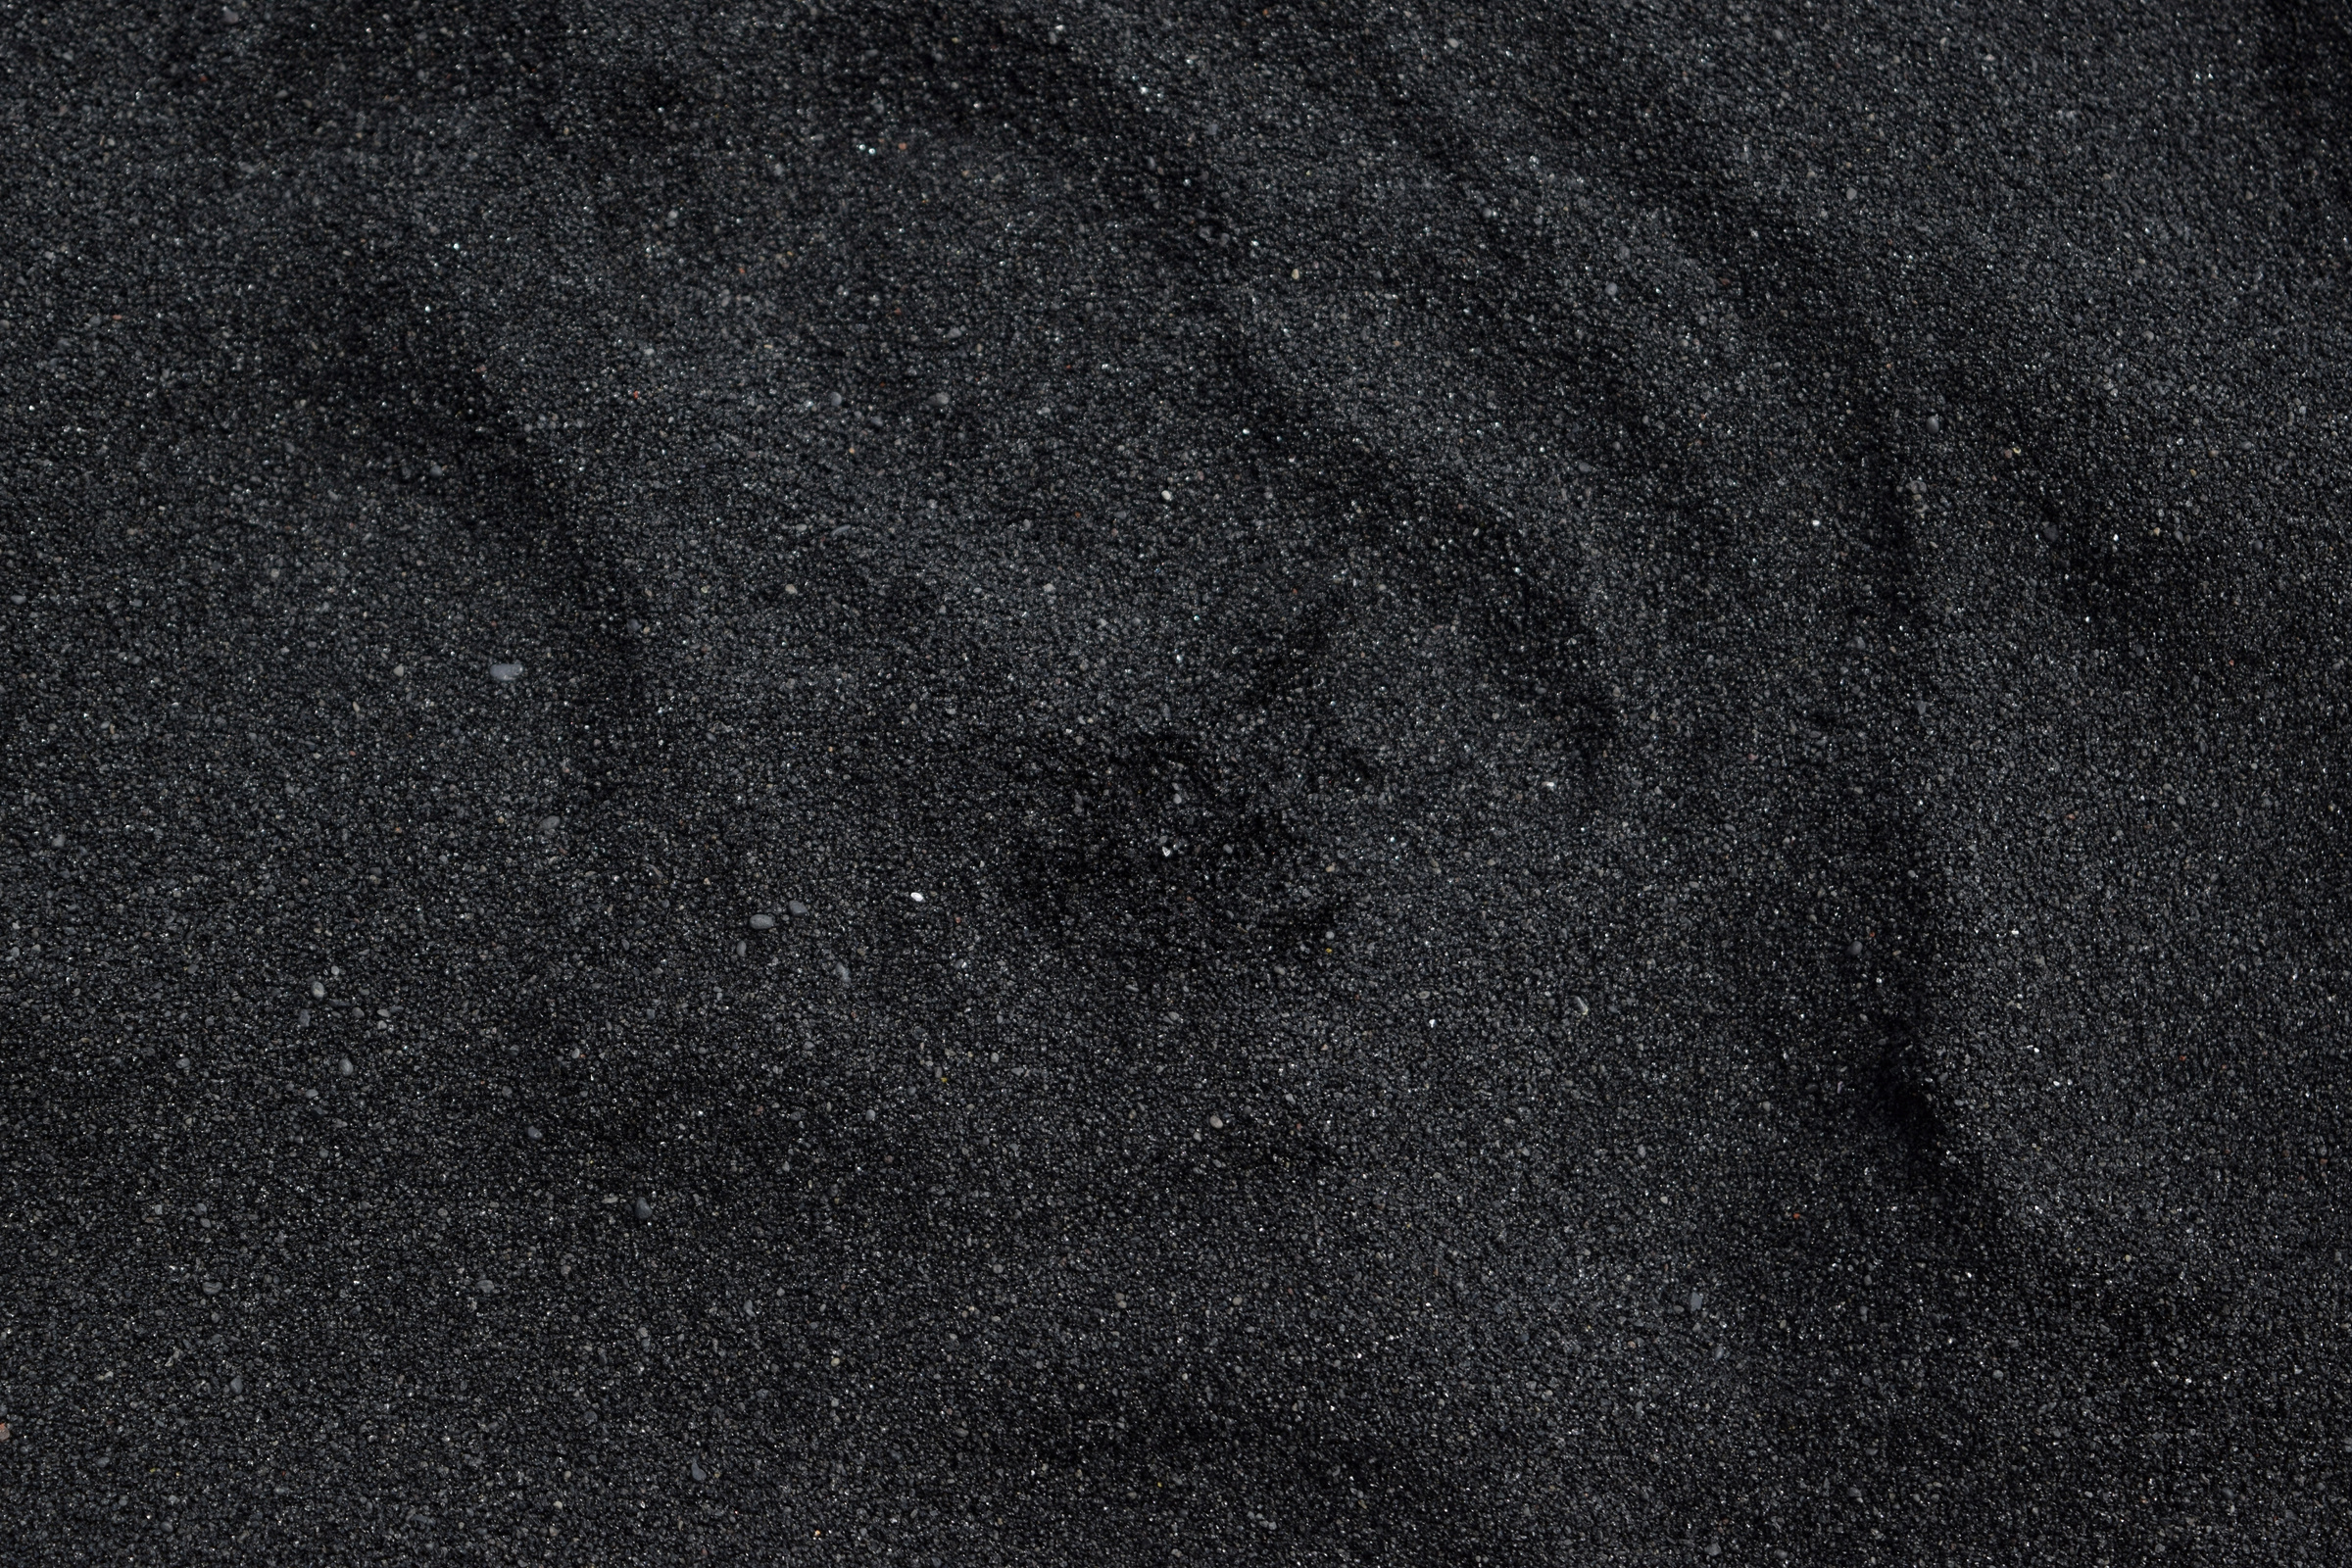 Close Up Photo of Black Sand